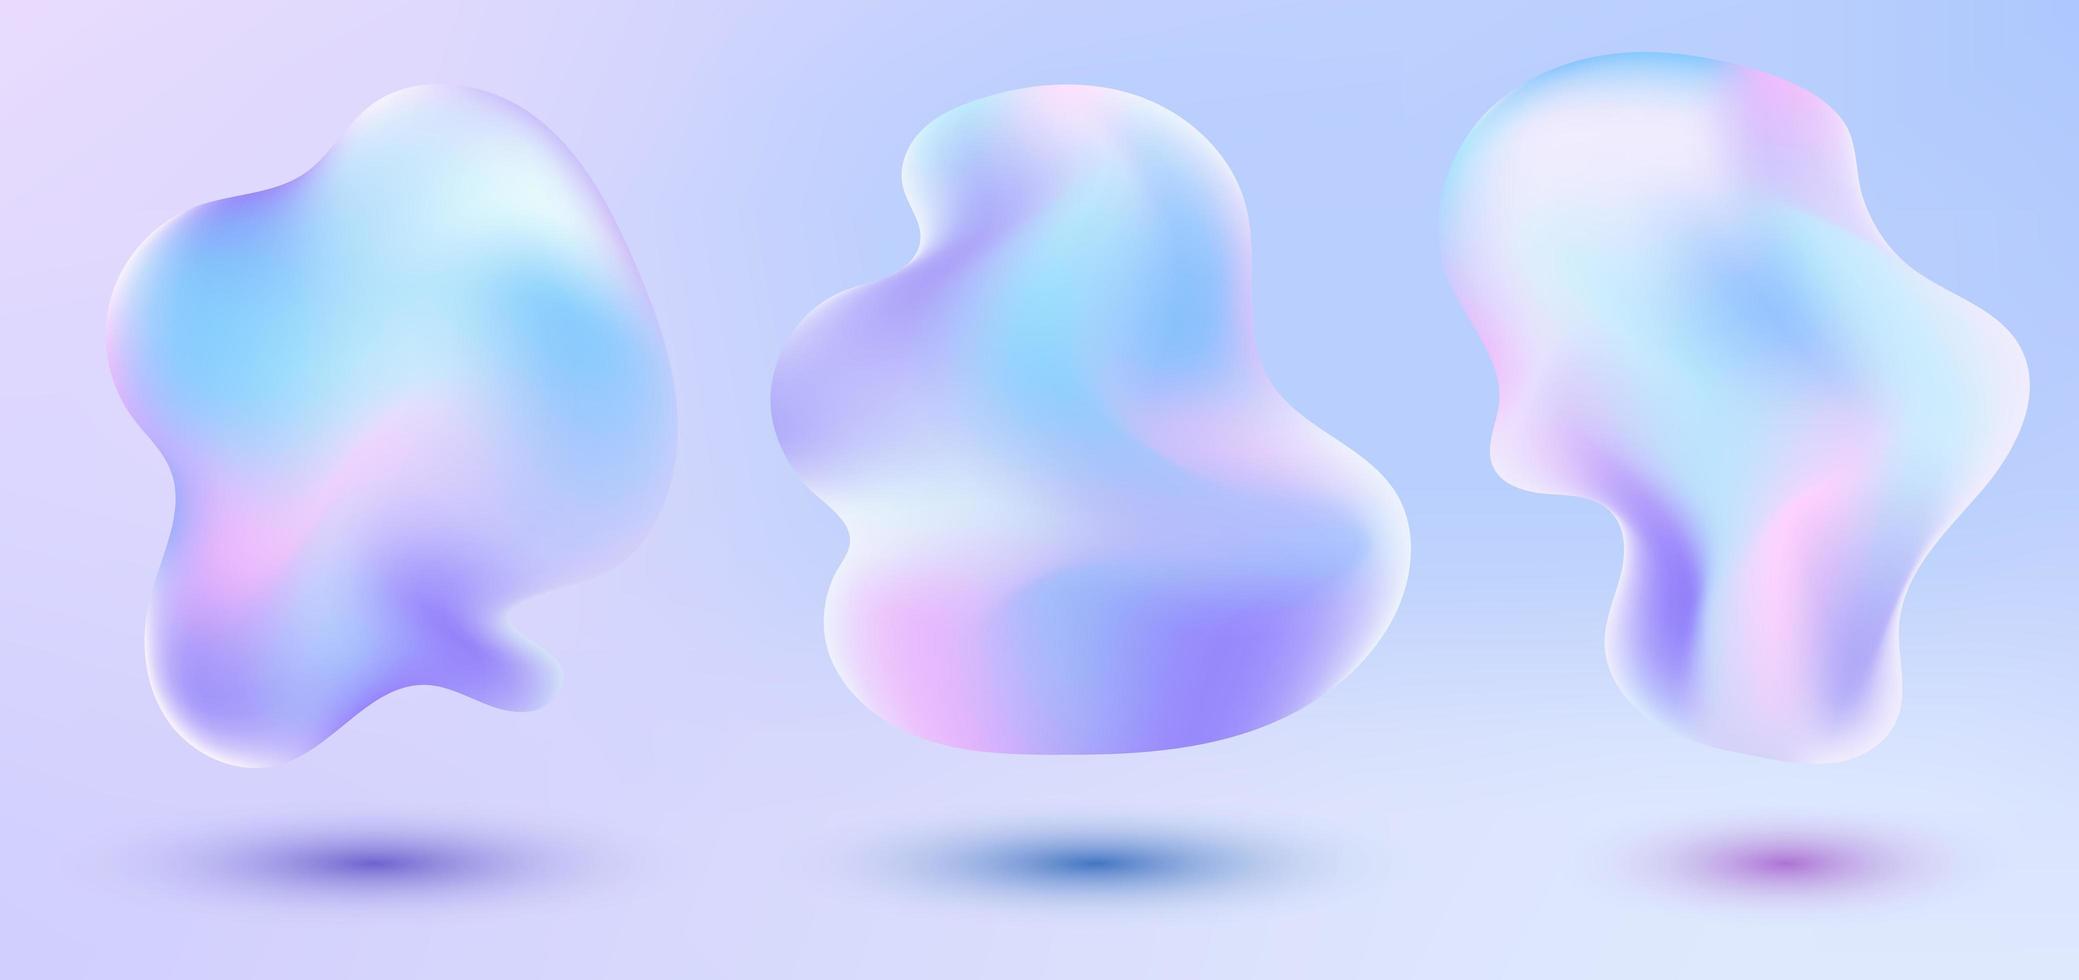 Set of 3D fluid or liquid flowing shape design element holographic background vector